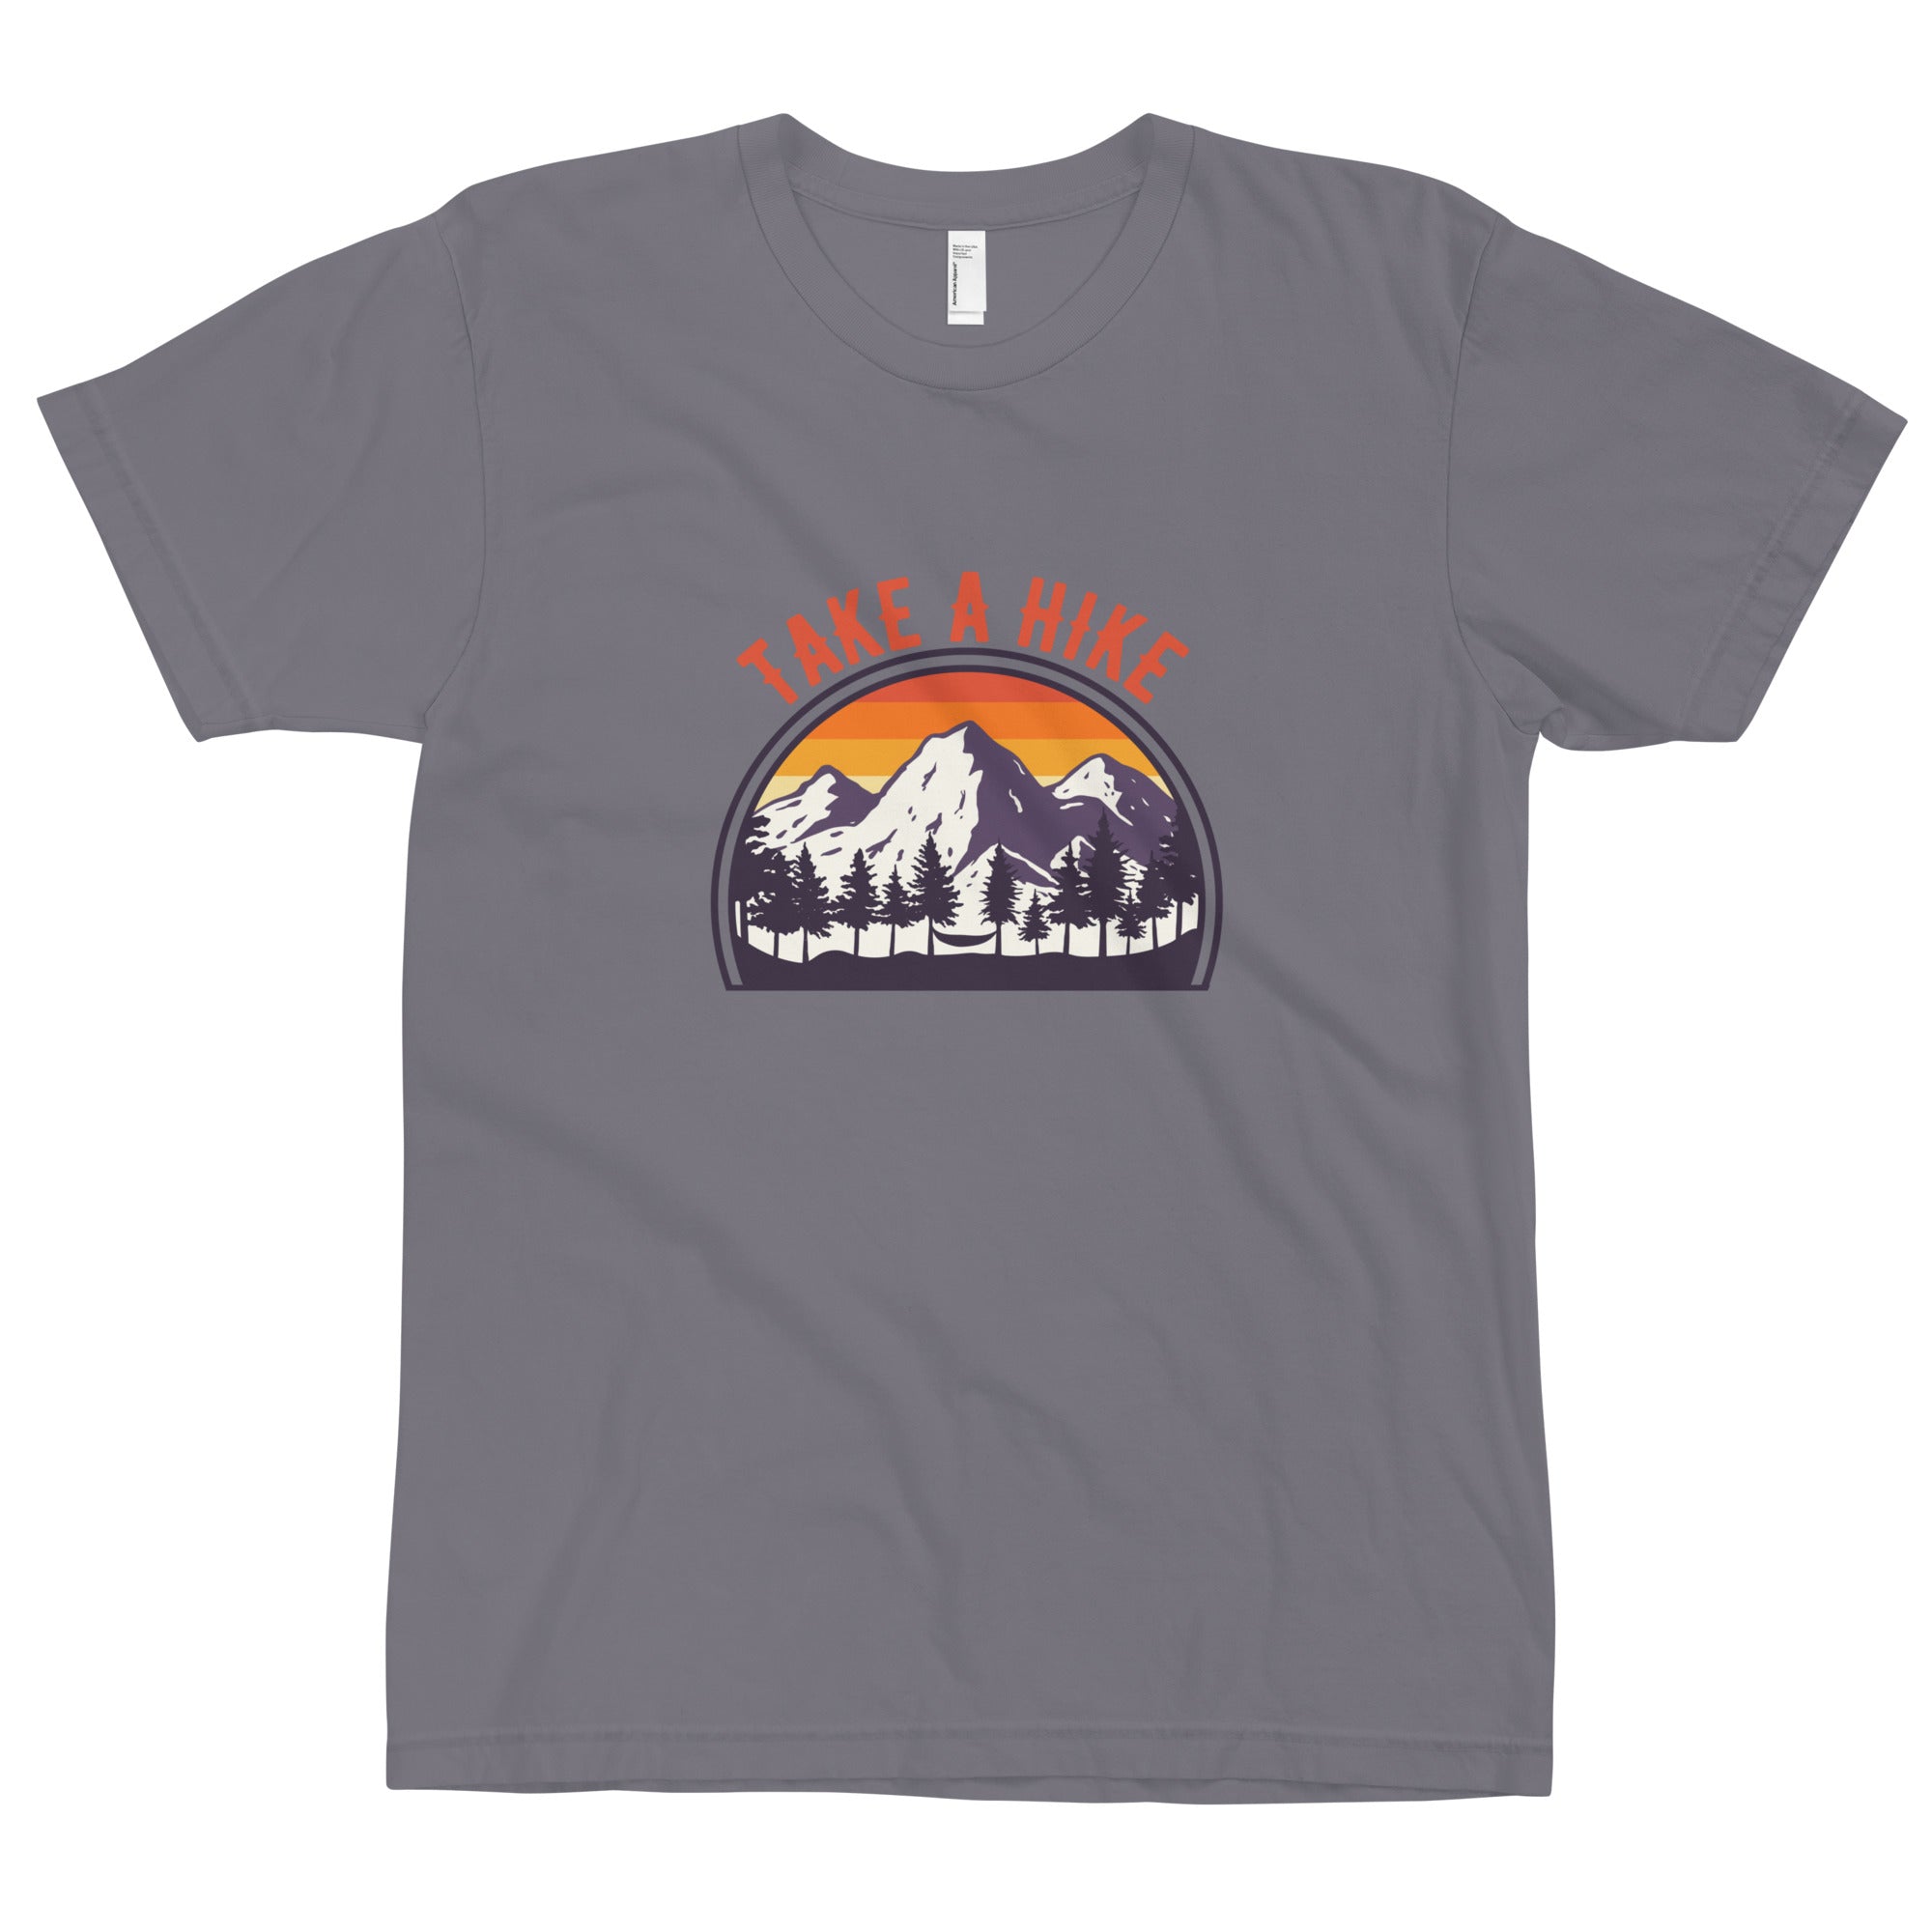 Take a Hike Unisex T-Shirt